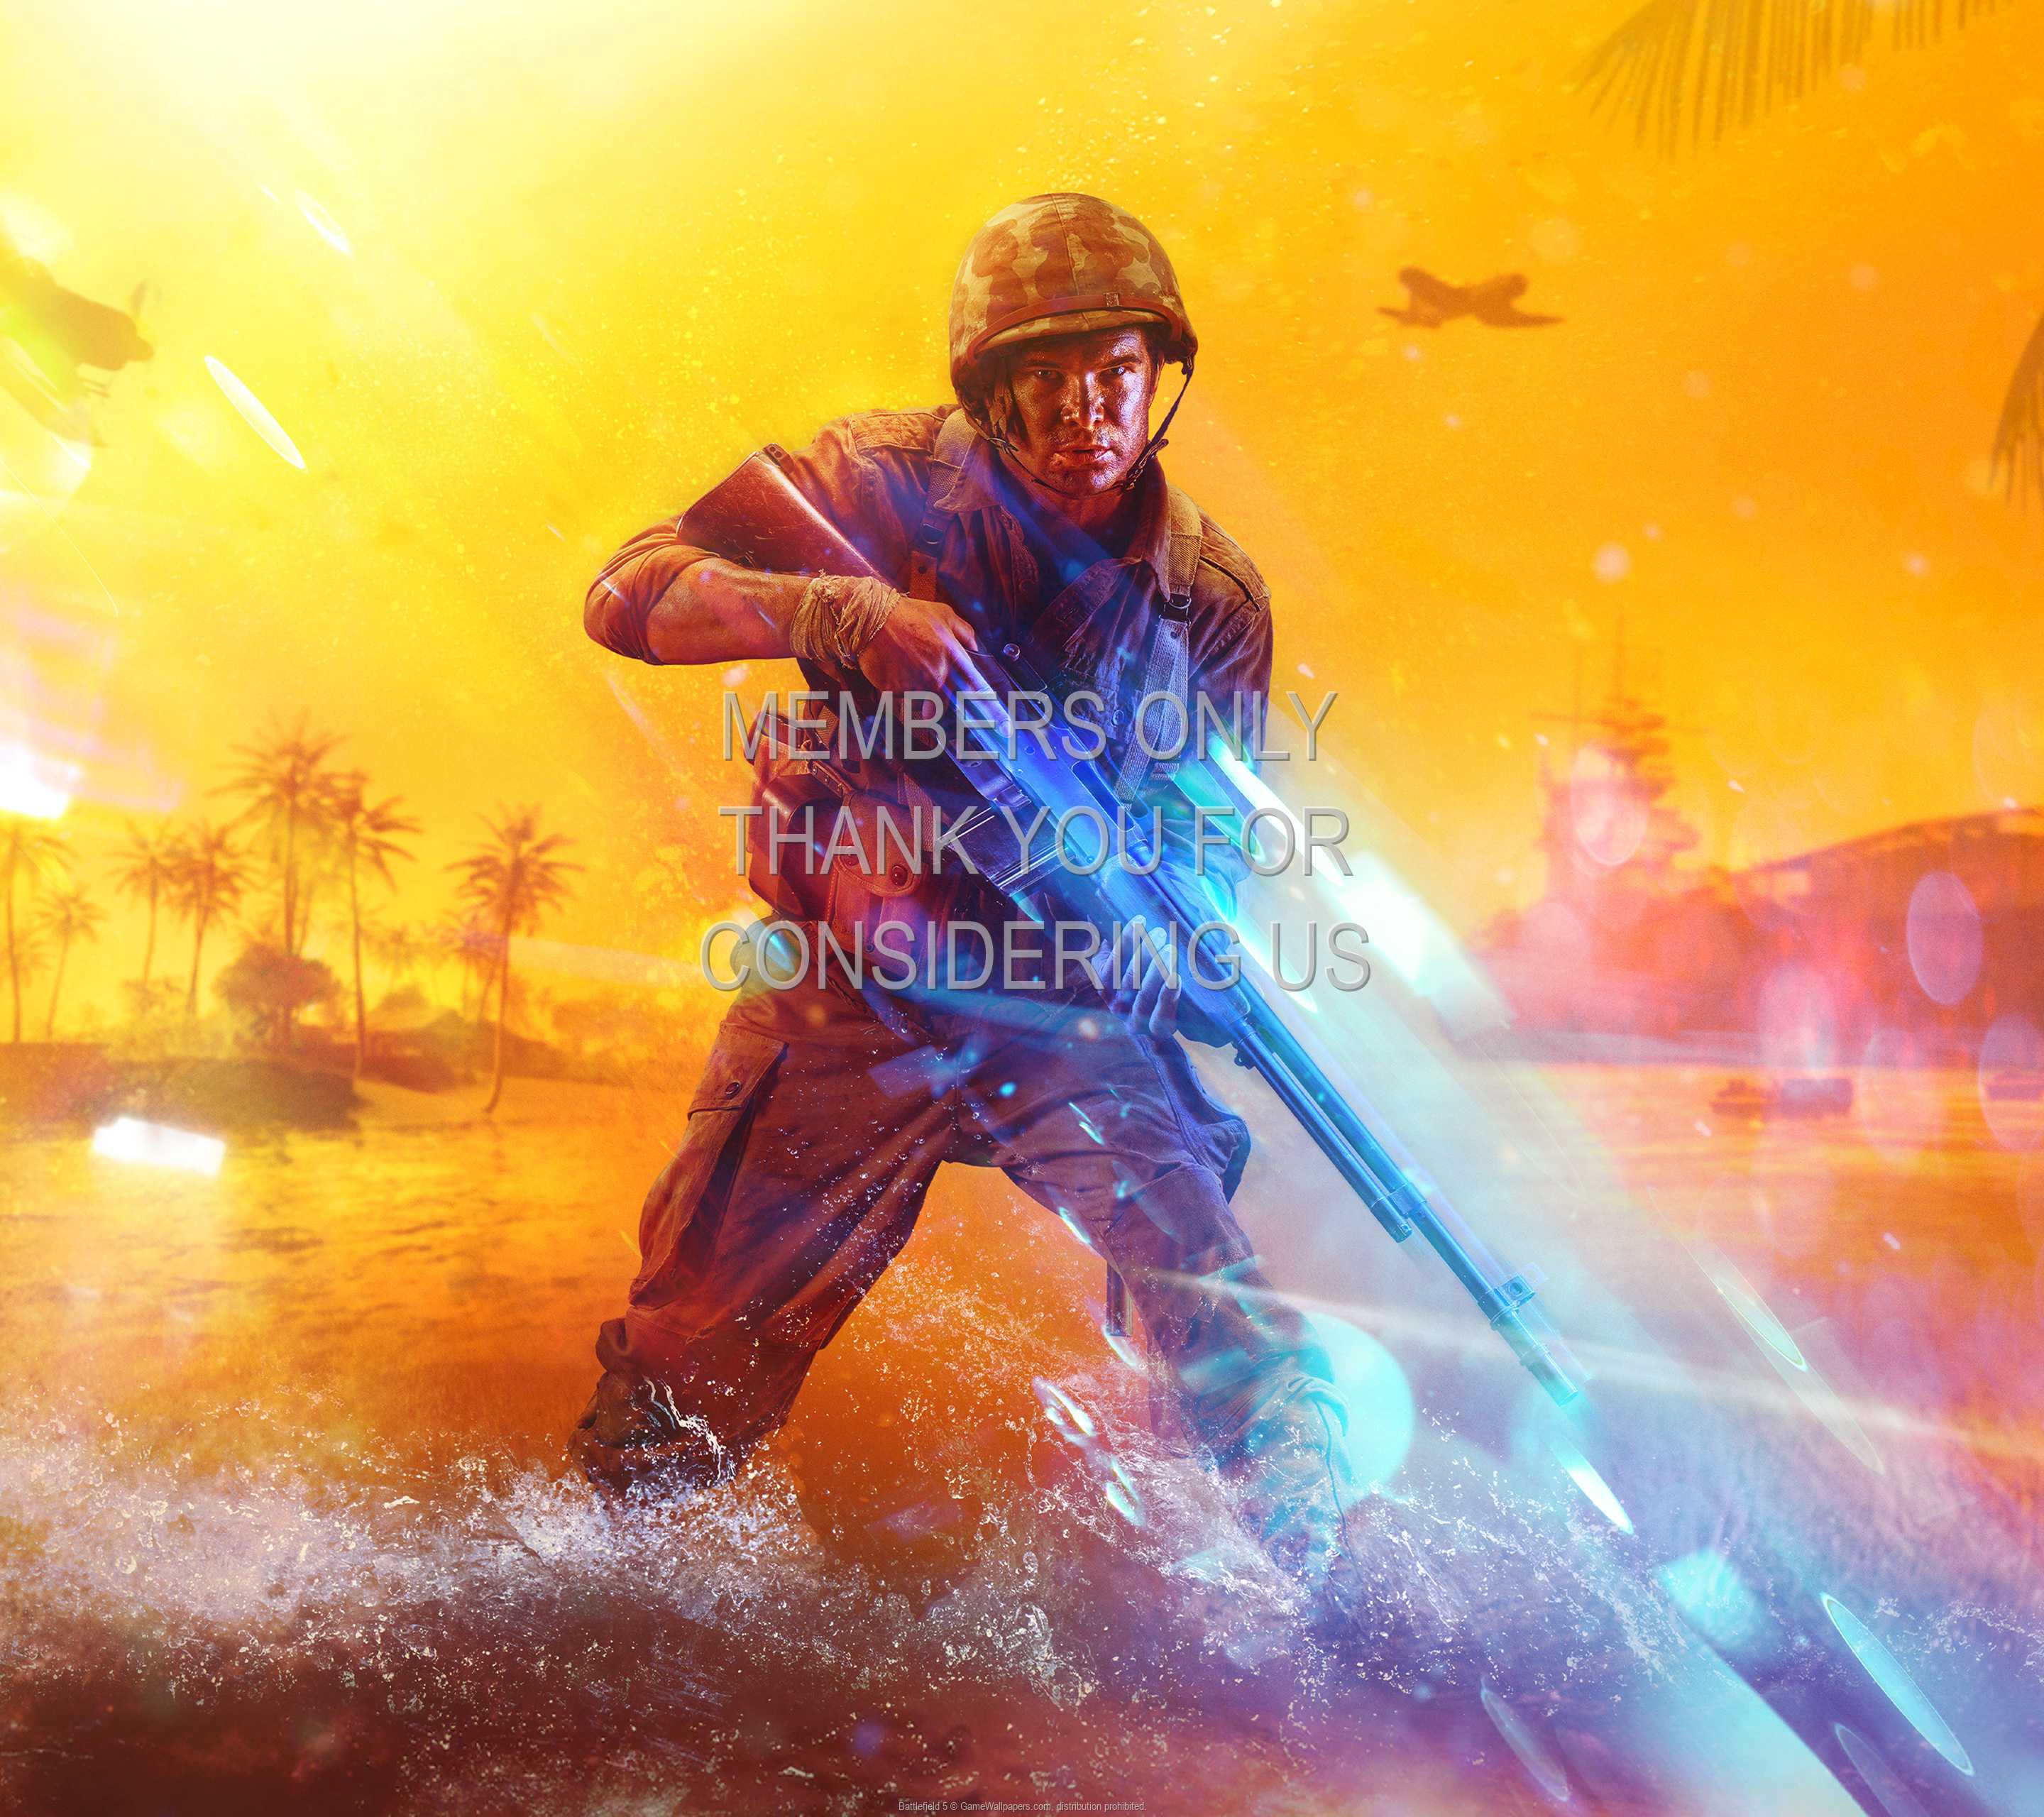 Battlefield 5 1440p Horizontal Mobile wallpaper or background 06